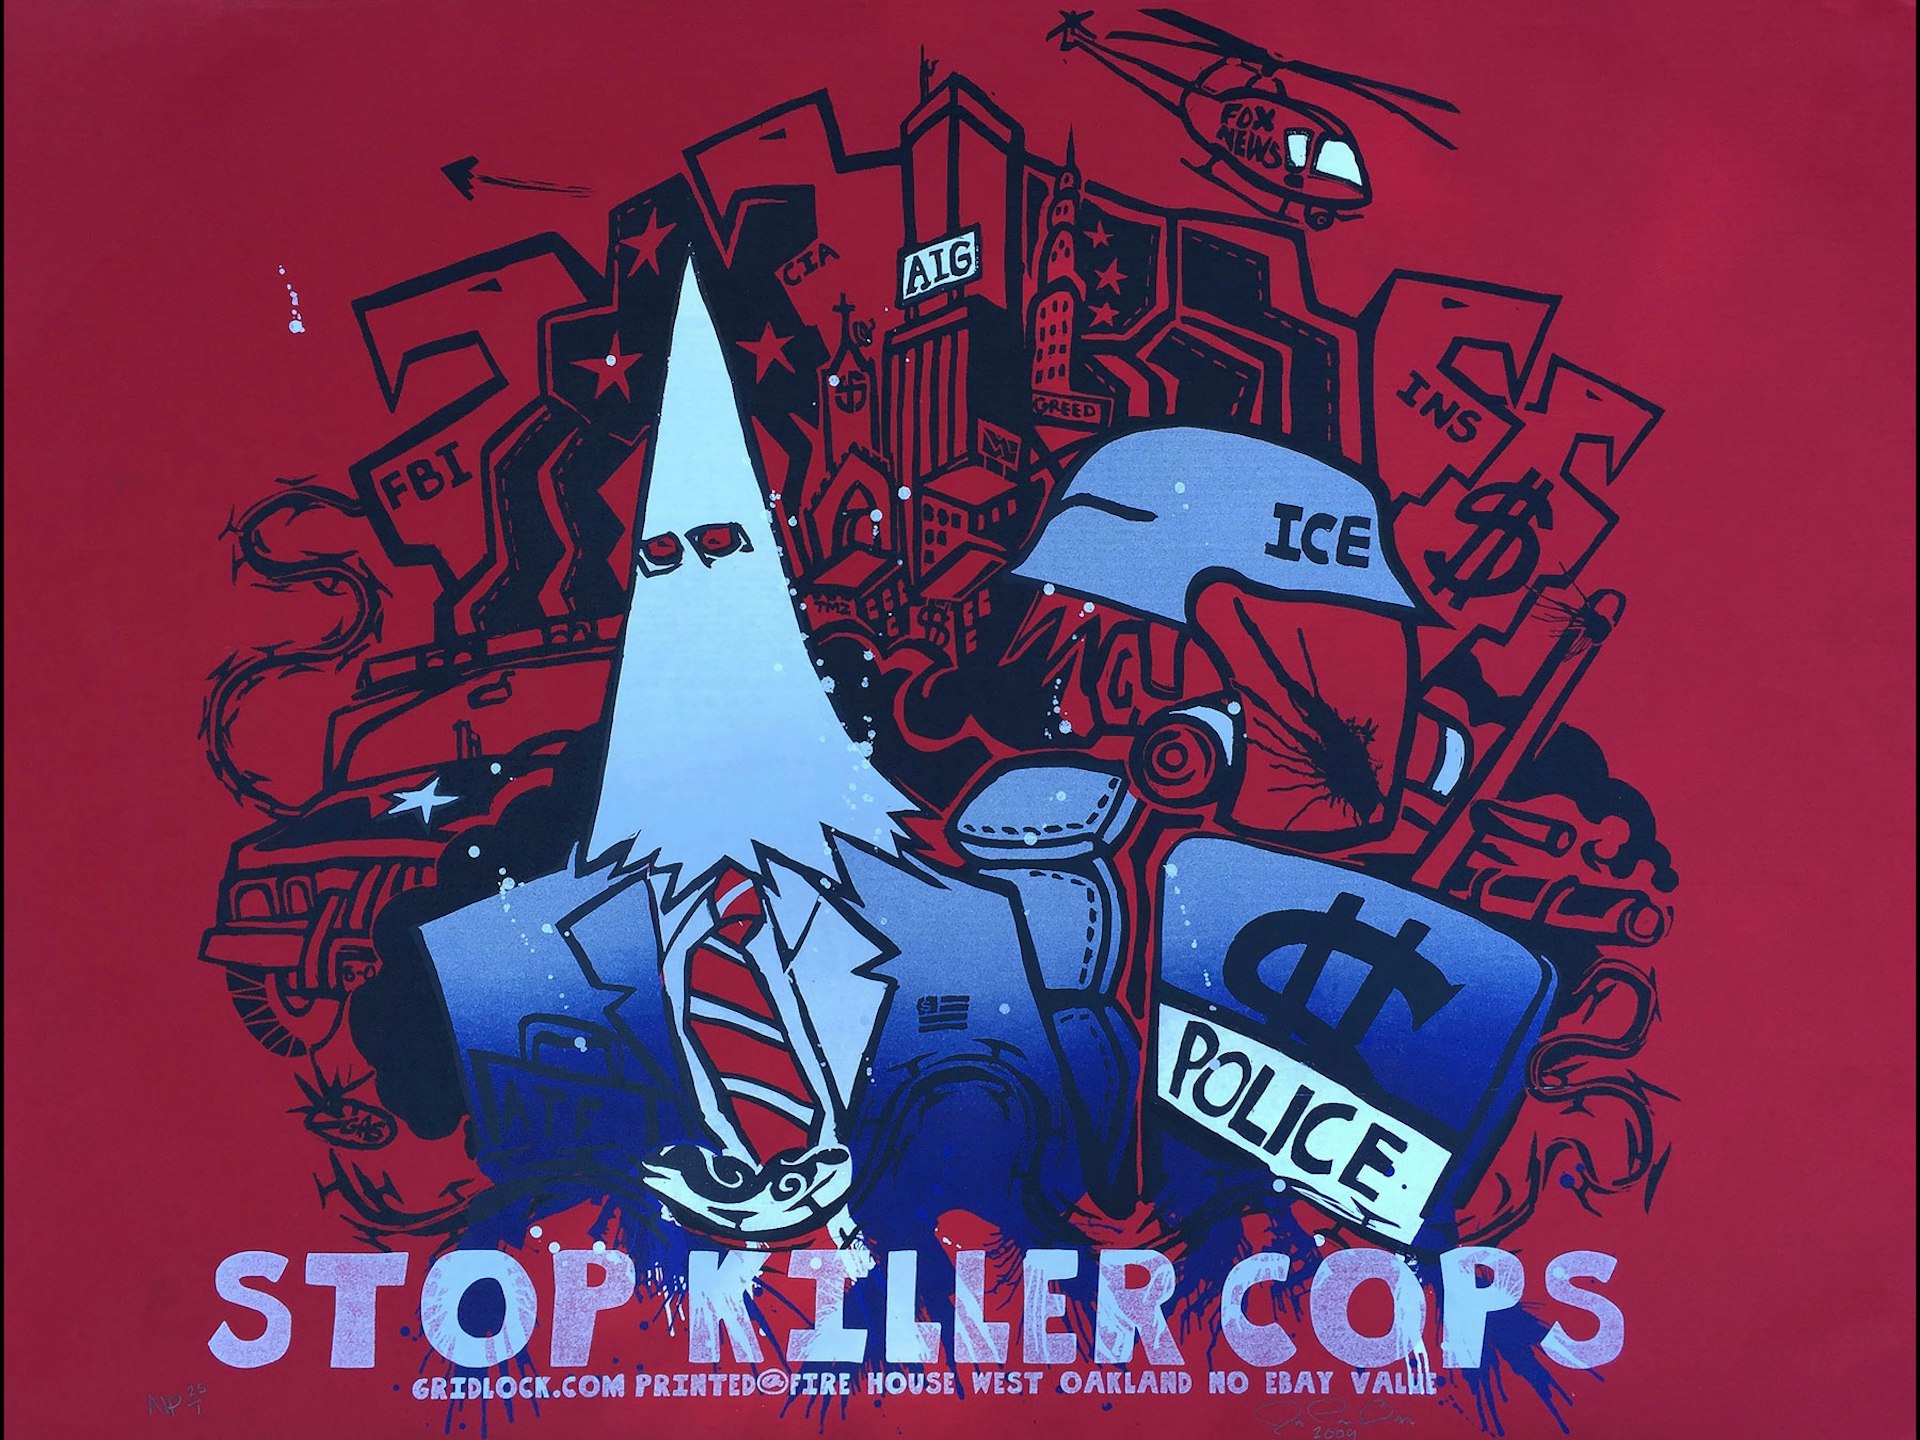 'Stop Killer Cops' by Political Gridlock.